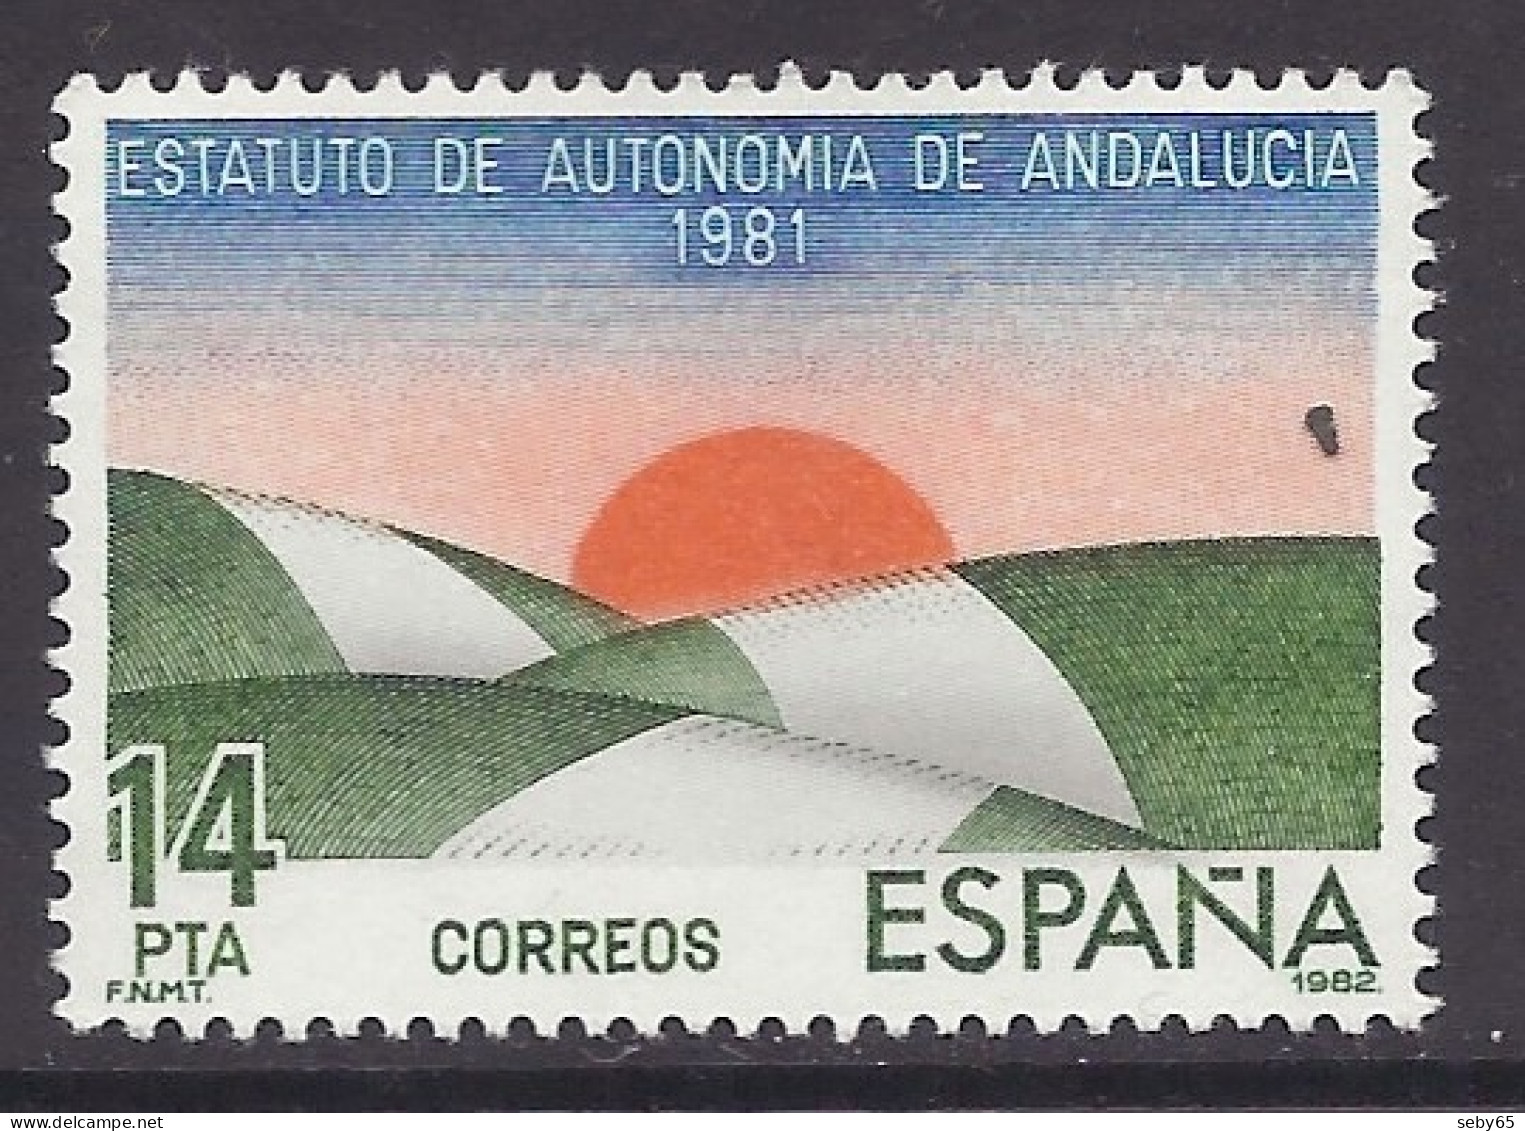 Spain 1983 - Estatutos De Autonomías, Region De Andalucia, Andalusia, Sun Sunrise, Emblem - MNH - Ongebruikt